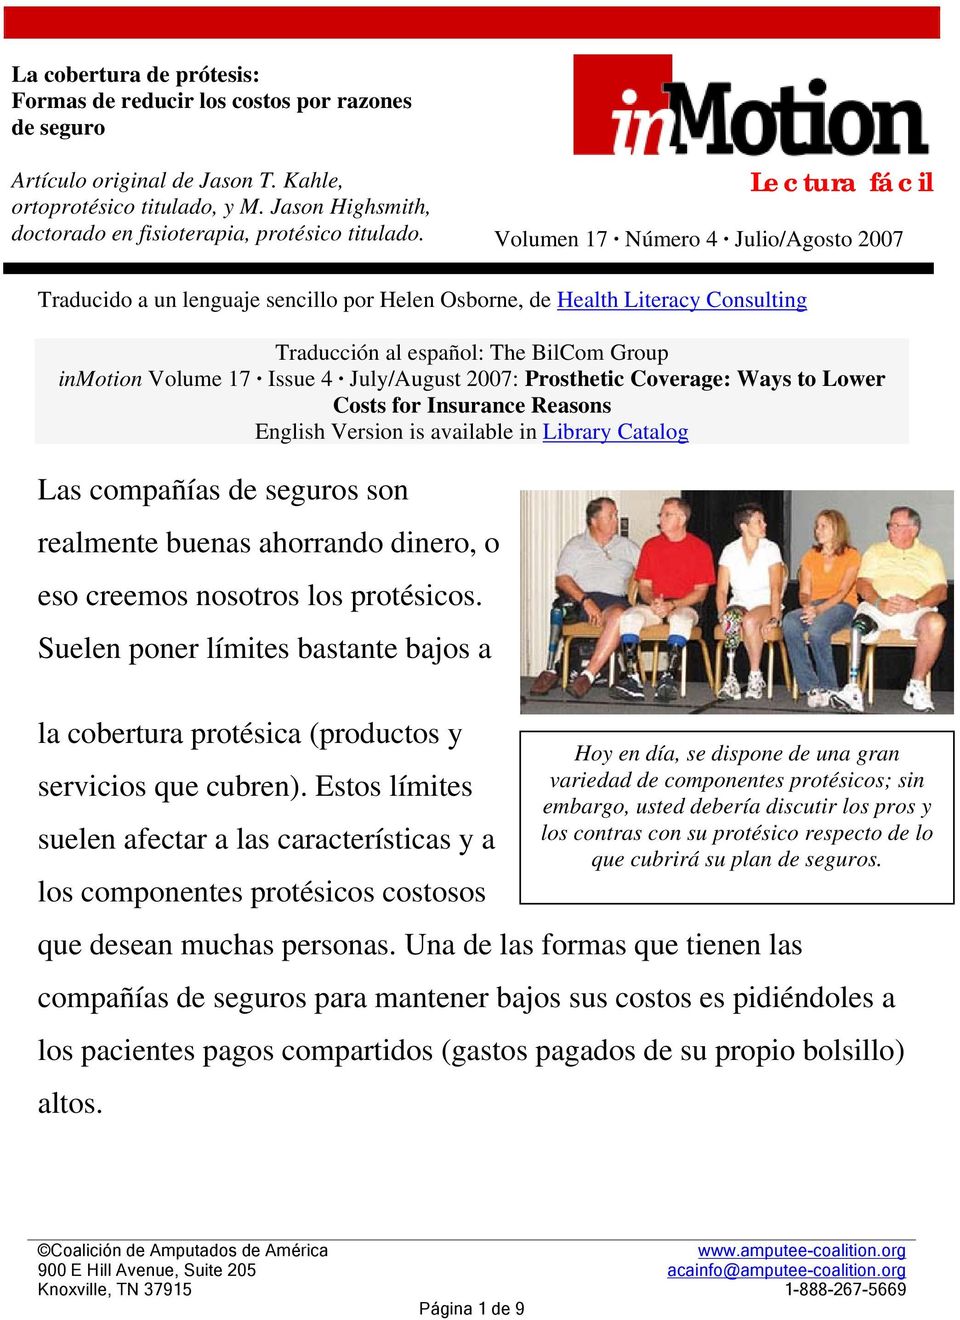 Lectura fácil Volumen 17 Número 4 Julio/Agosto 2007 Traducido a un lenguaje sencillo por Helen Osborne, de Health Literacy Consulting Traducción al español: The BilCom Group inmotion Volume 17 Issue